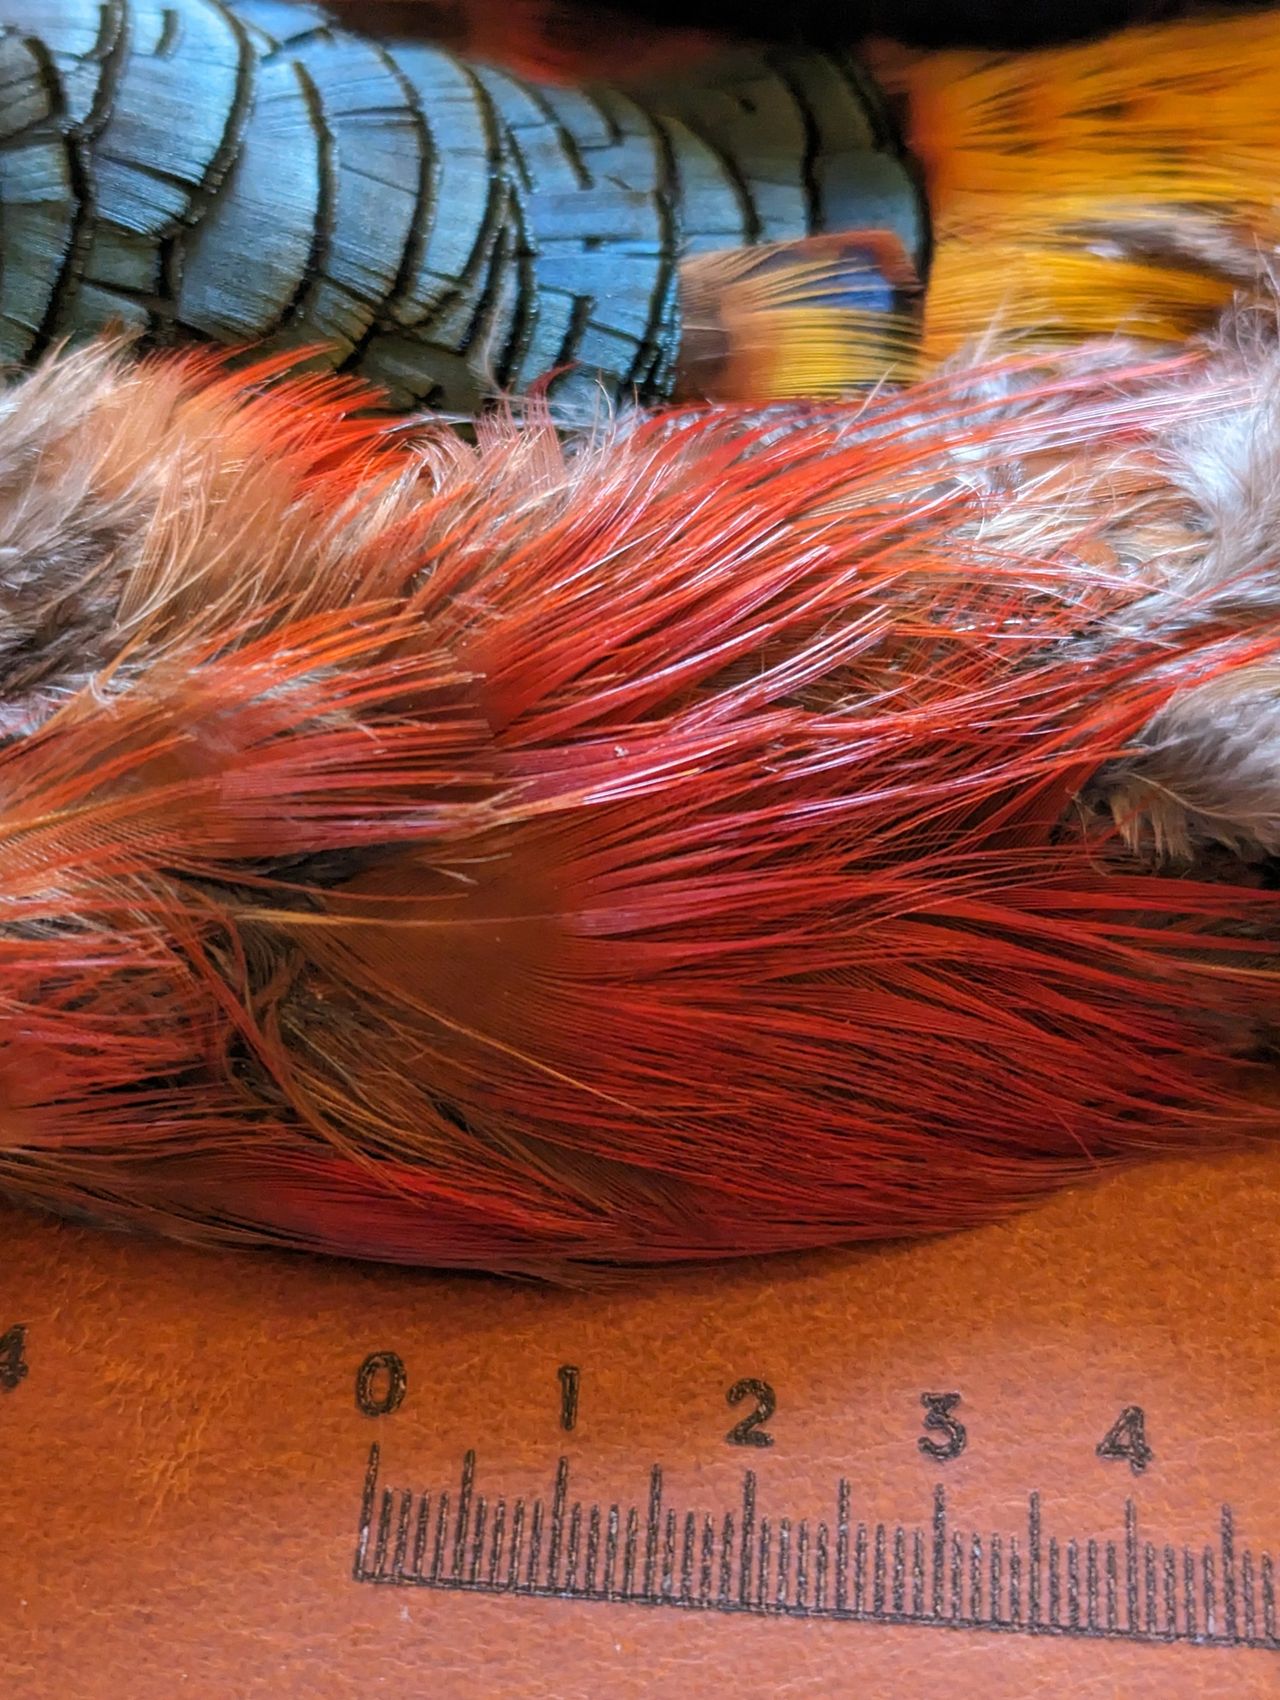 Atlantic Salmon Fly of the week – Bonner's Silver Shrimp